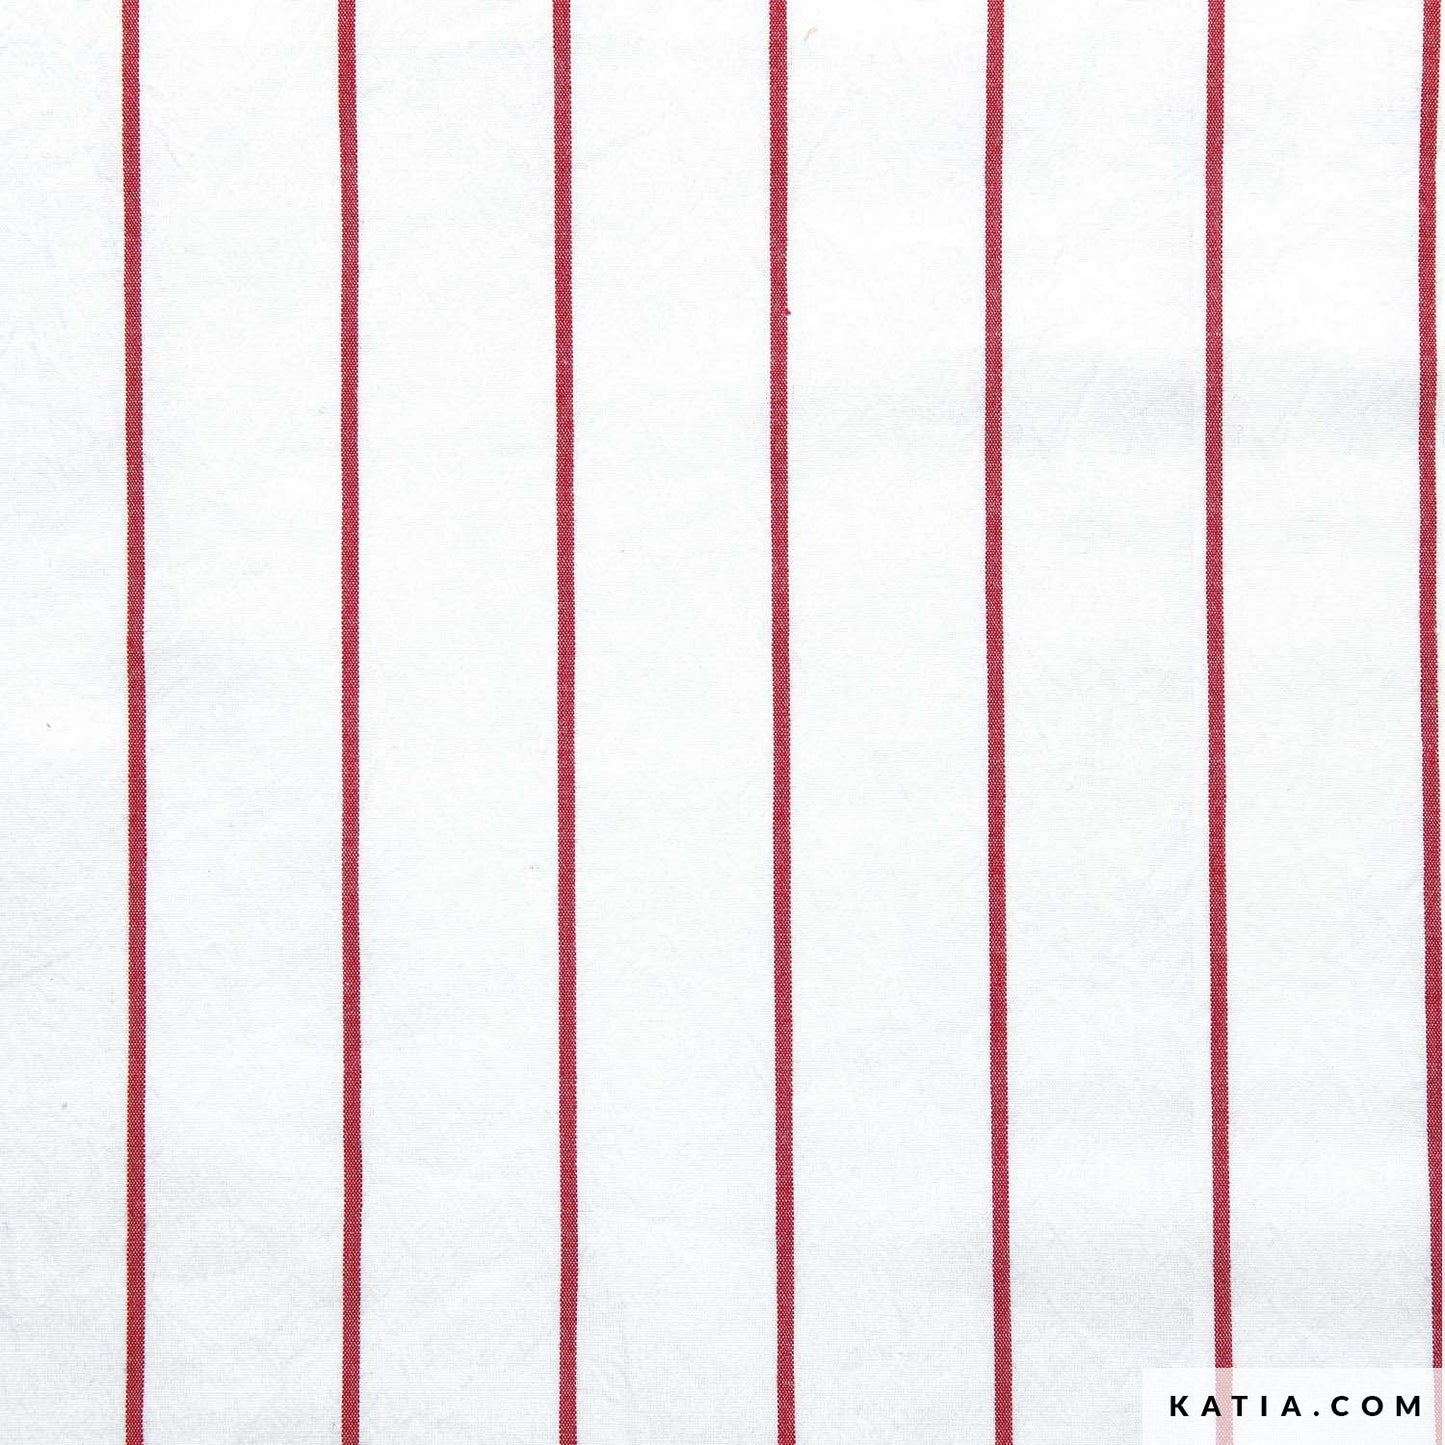 Nautic Stripes - Red & Ecru - Woven Cotton